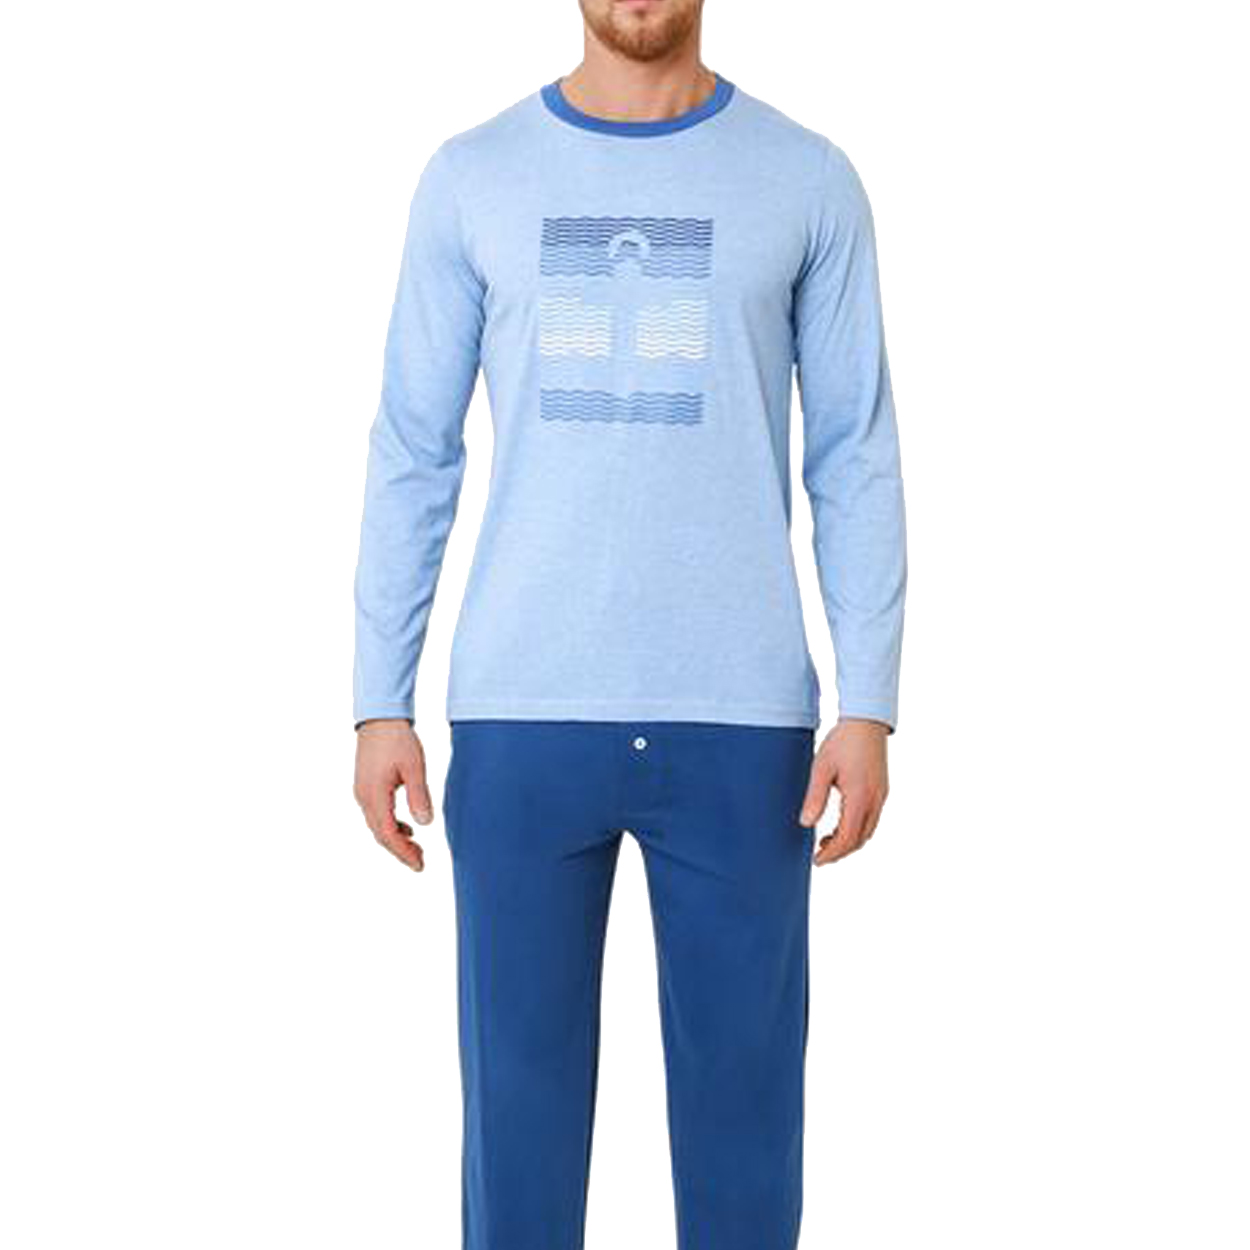 Pyjama long Mariner en coton : tee-shirt manches longues col rond bleu ciel floqué et pantalon bleu 